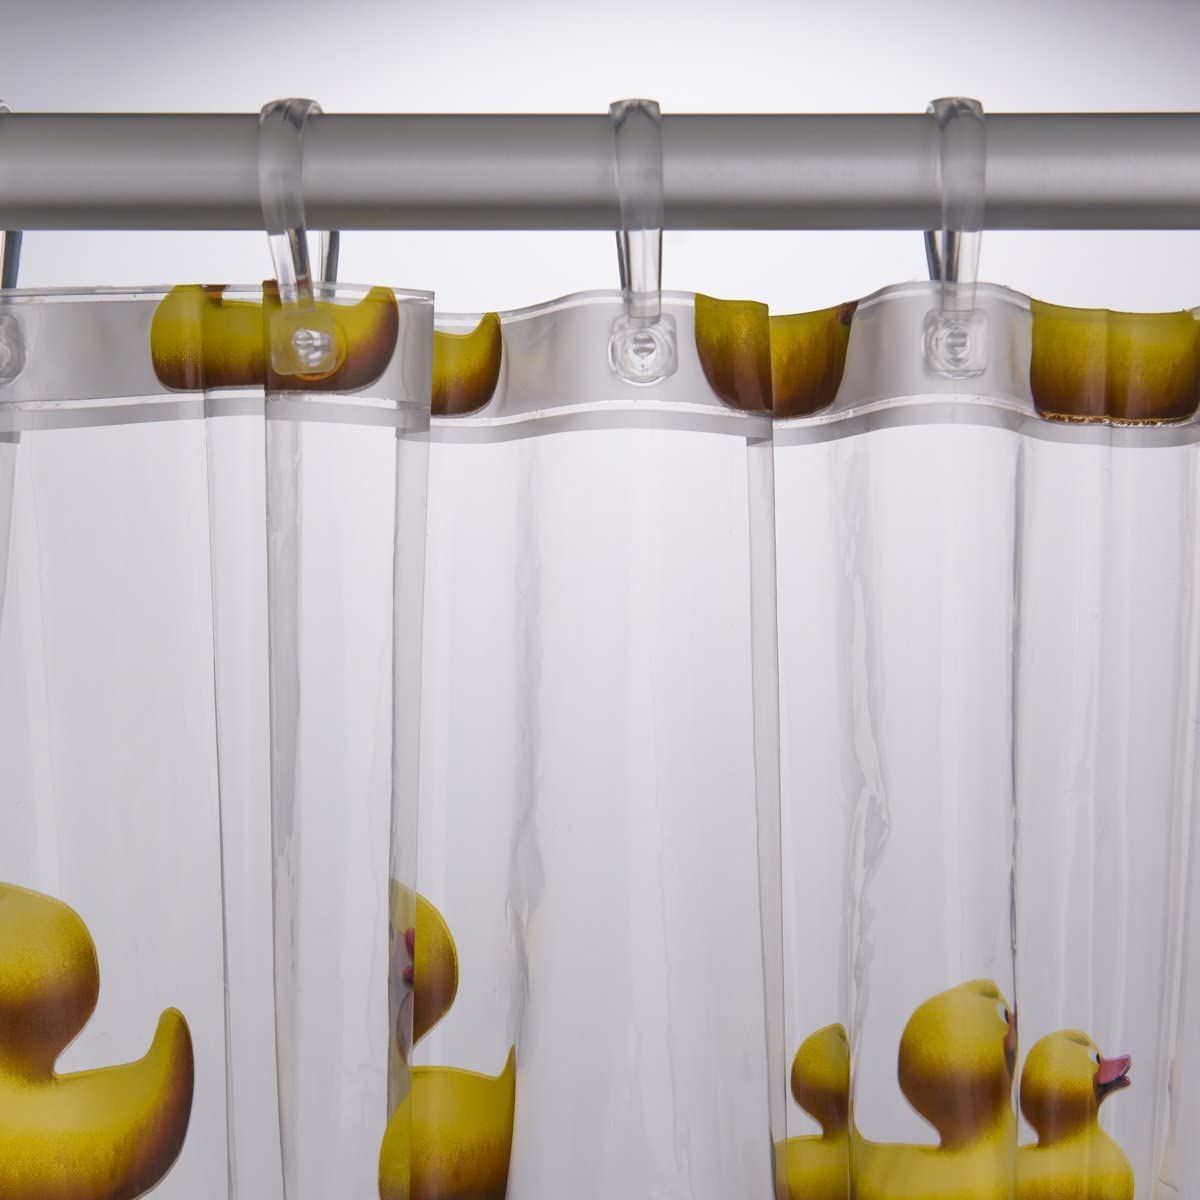 Textil Duschvorhang Duckling, Farbe: Gelb, B x H: 180 x 200 cm